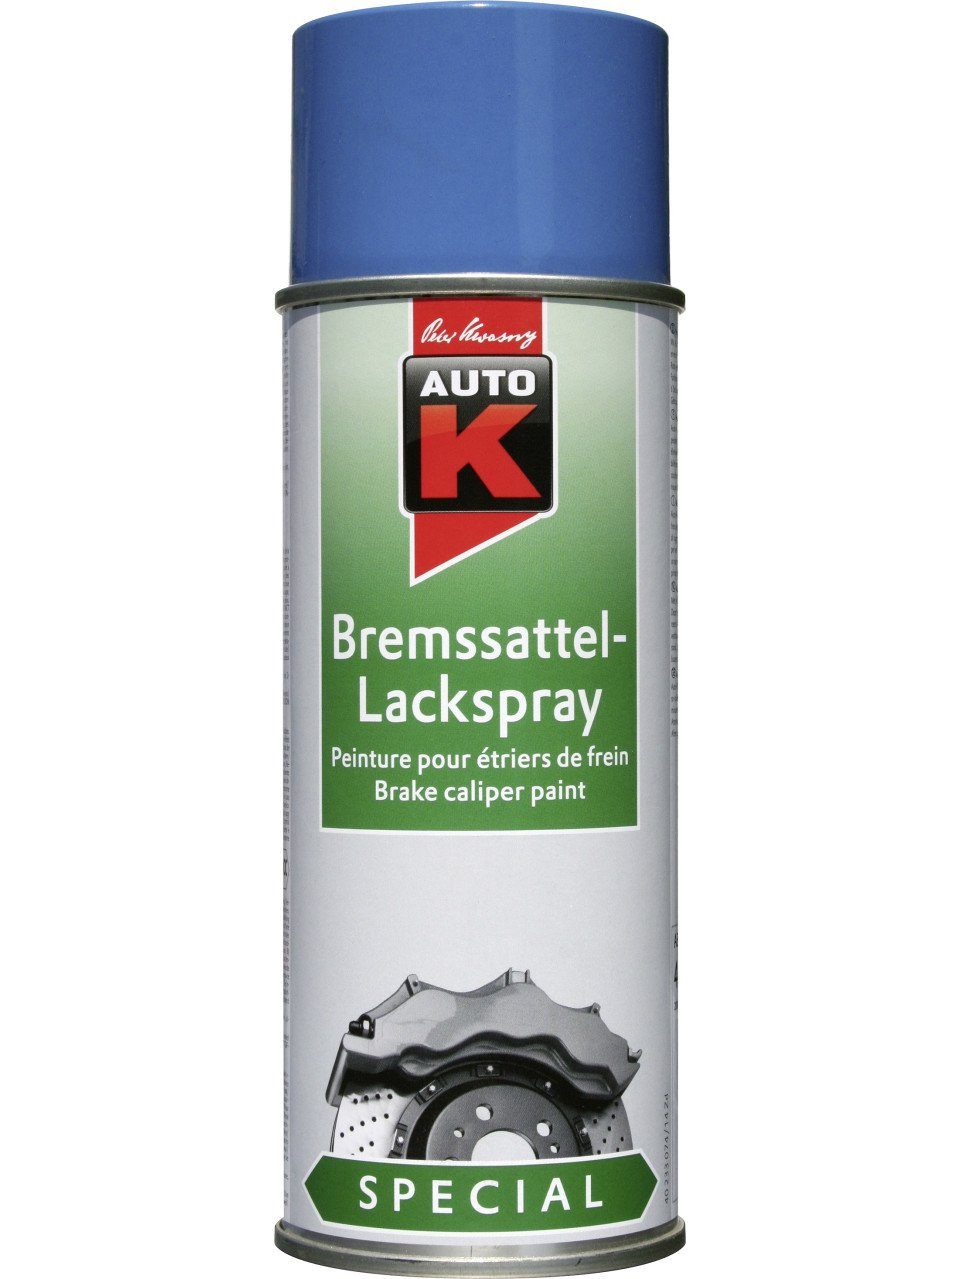 Auto-K blau Auto-K Special Bremssattel Lackspray 400ml Sprühlack